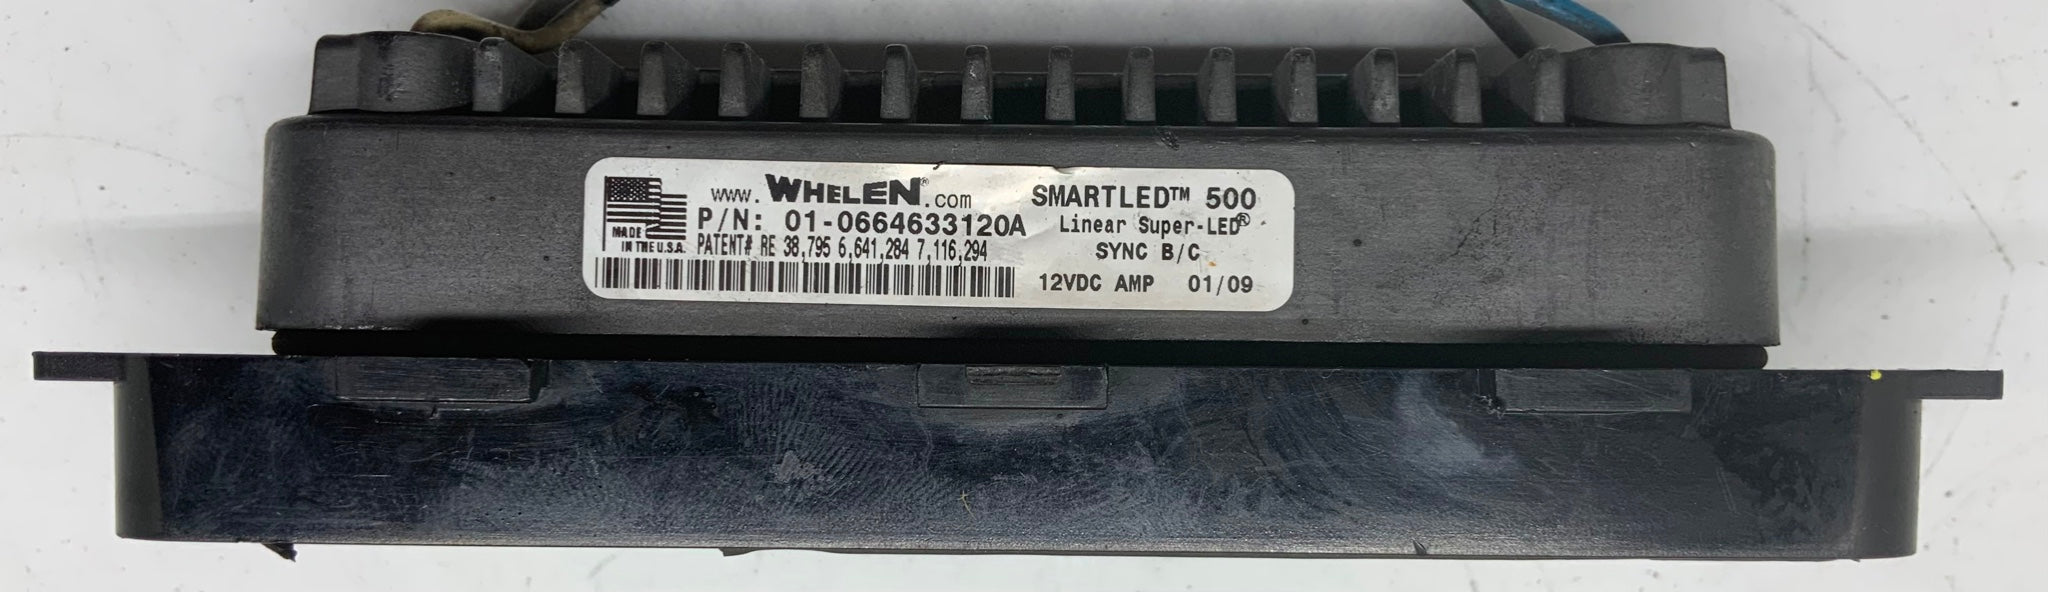 Whelen 500 Series Smart Led 500 Linear 6 Led Module With Scanlock Colour Blue